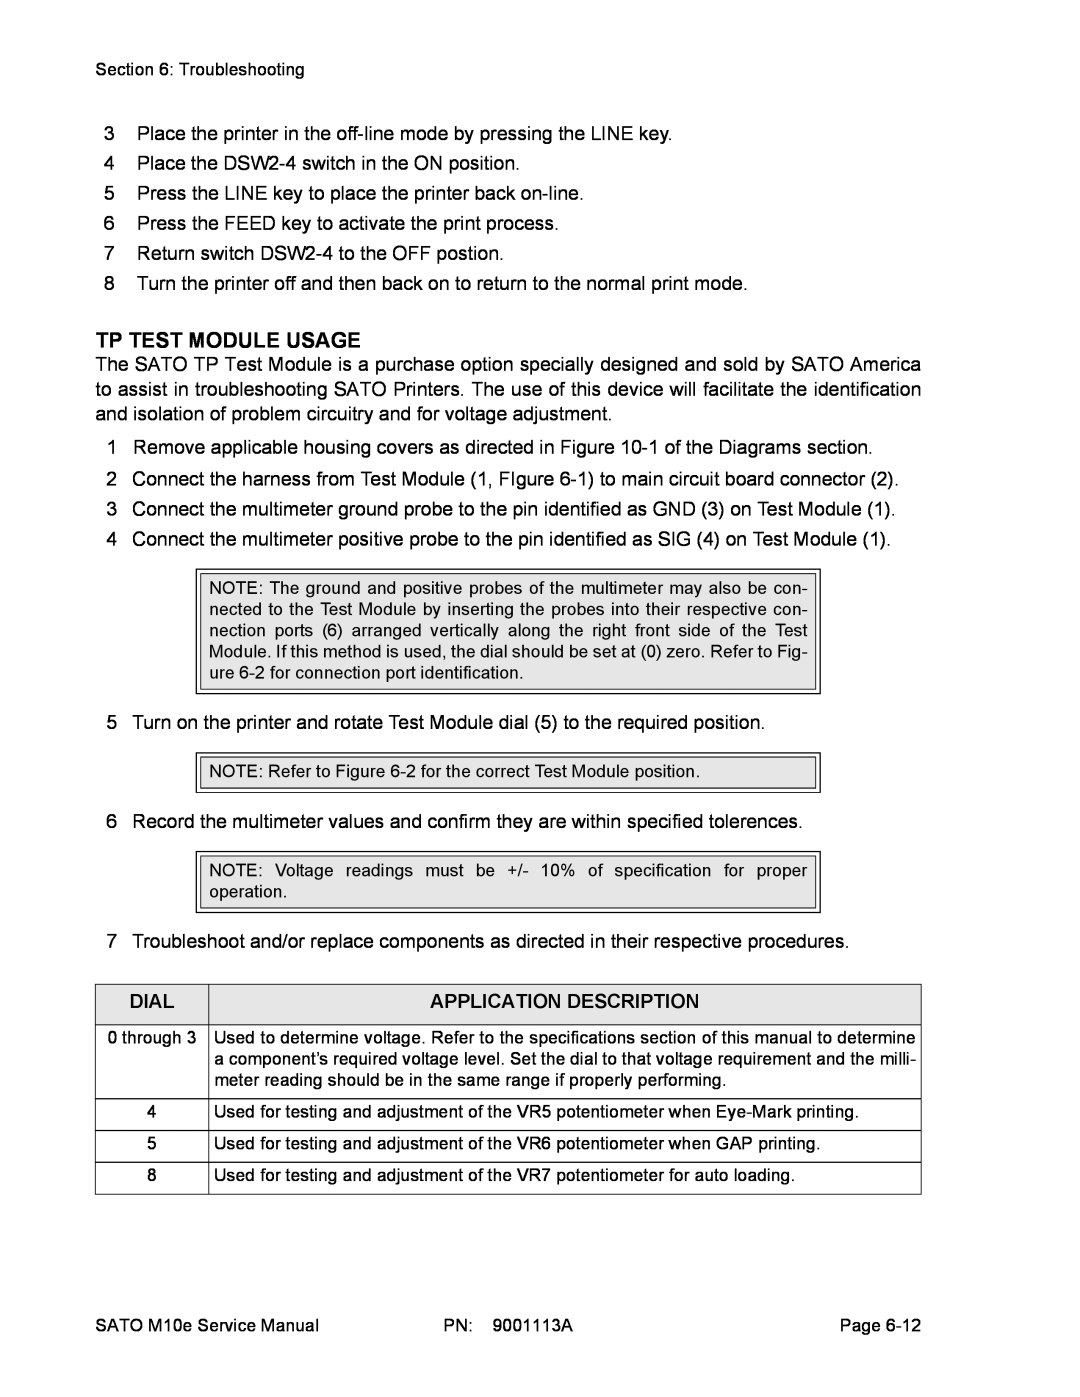 SATO 10e service manual Tp Test Module Usage, Dial, Application Description 